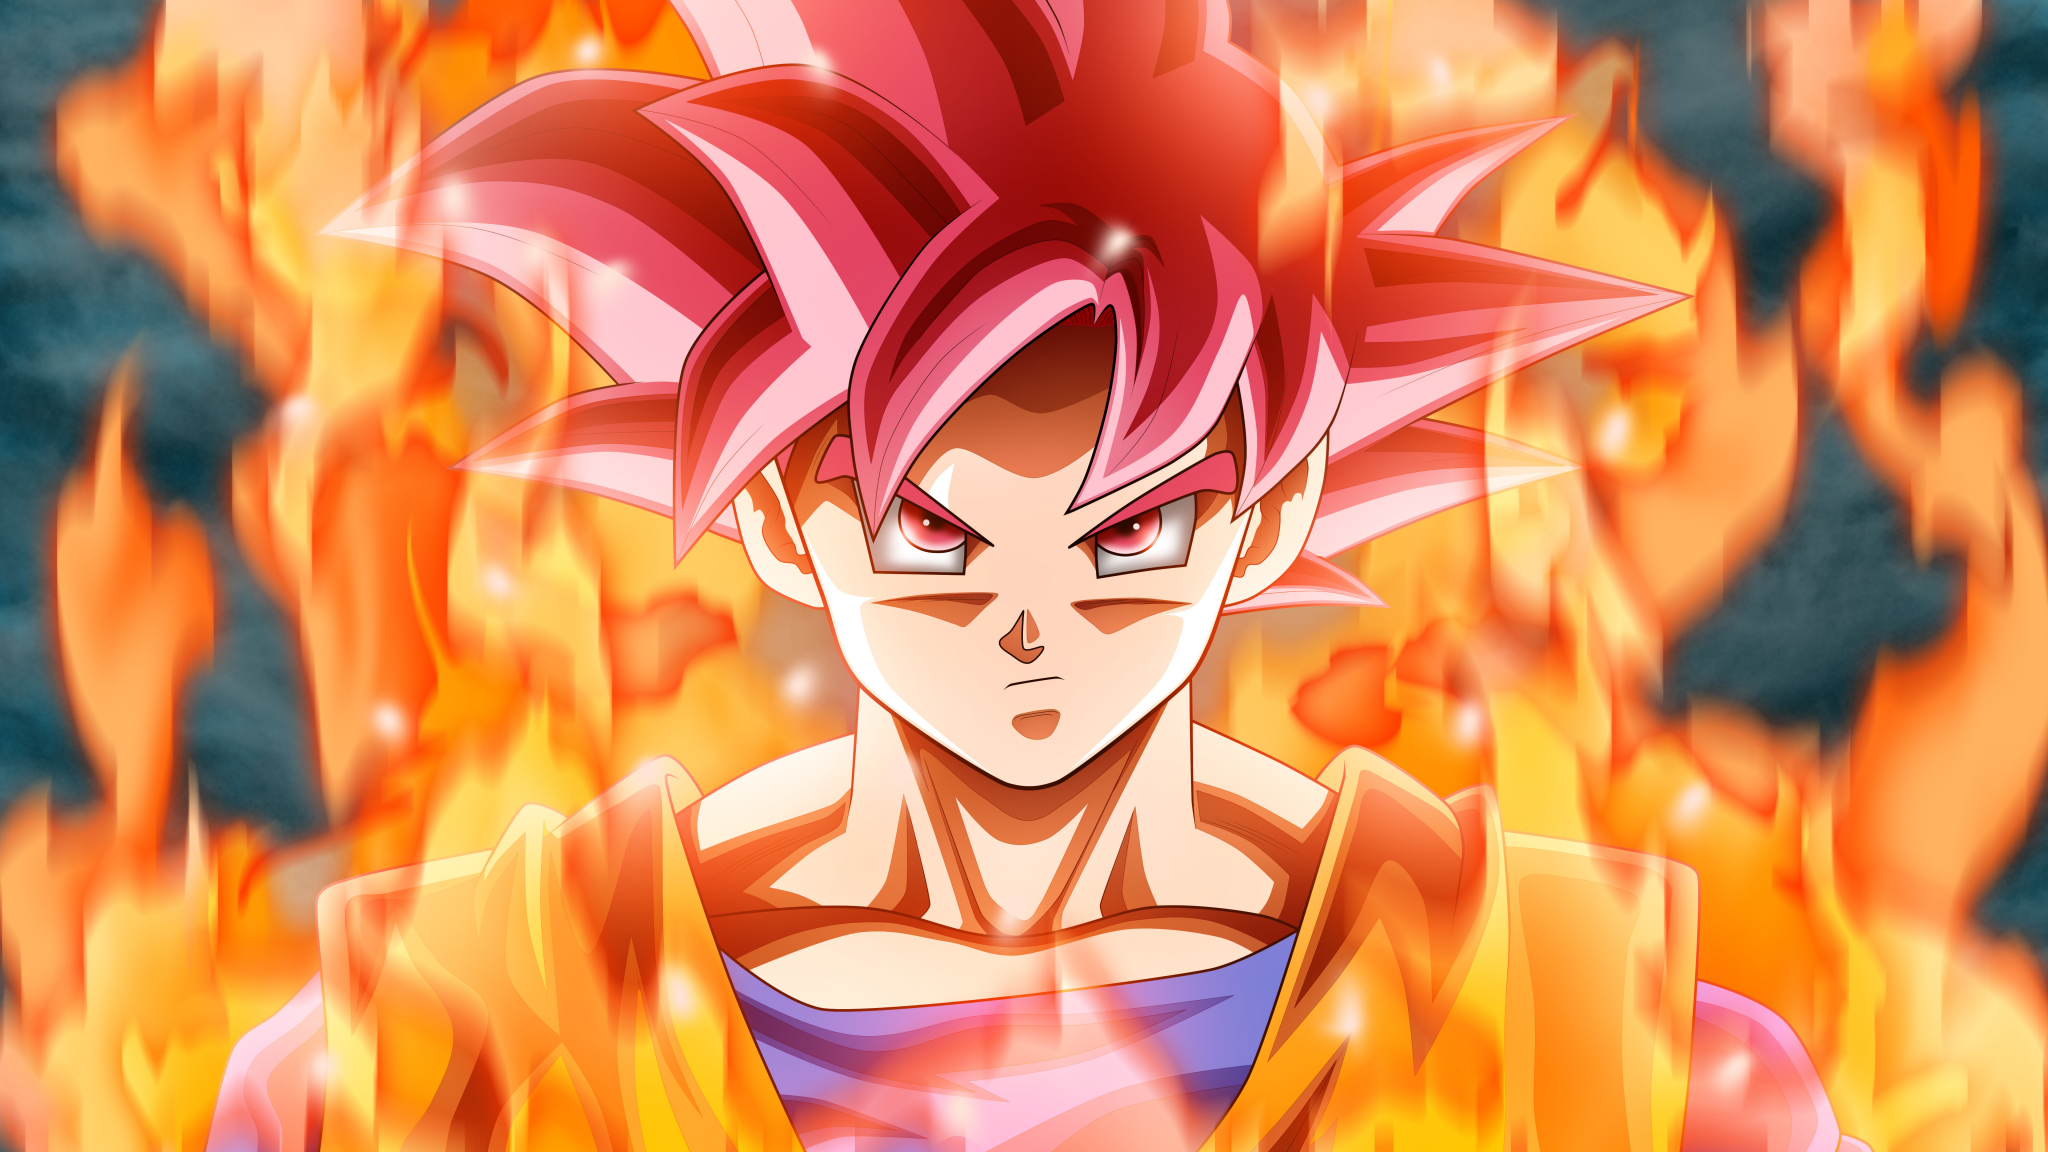 Download 2048x1152 Wallpaper Goku Fire Dragon Ball Super Anime Dual Wide Widescreen 2048x1152 Hd Image Background 1273